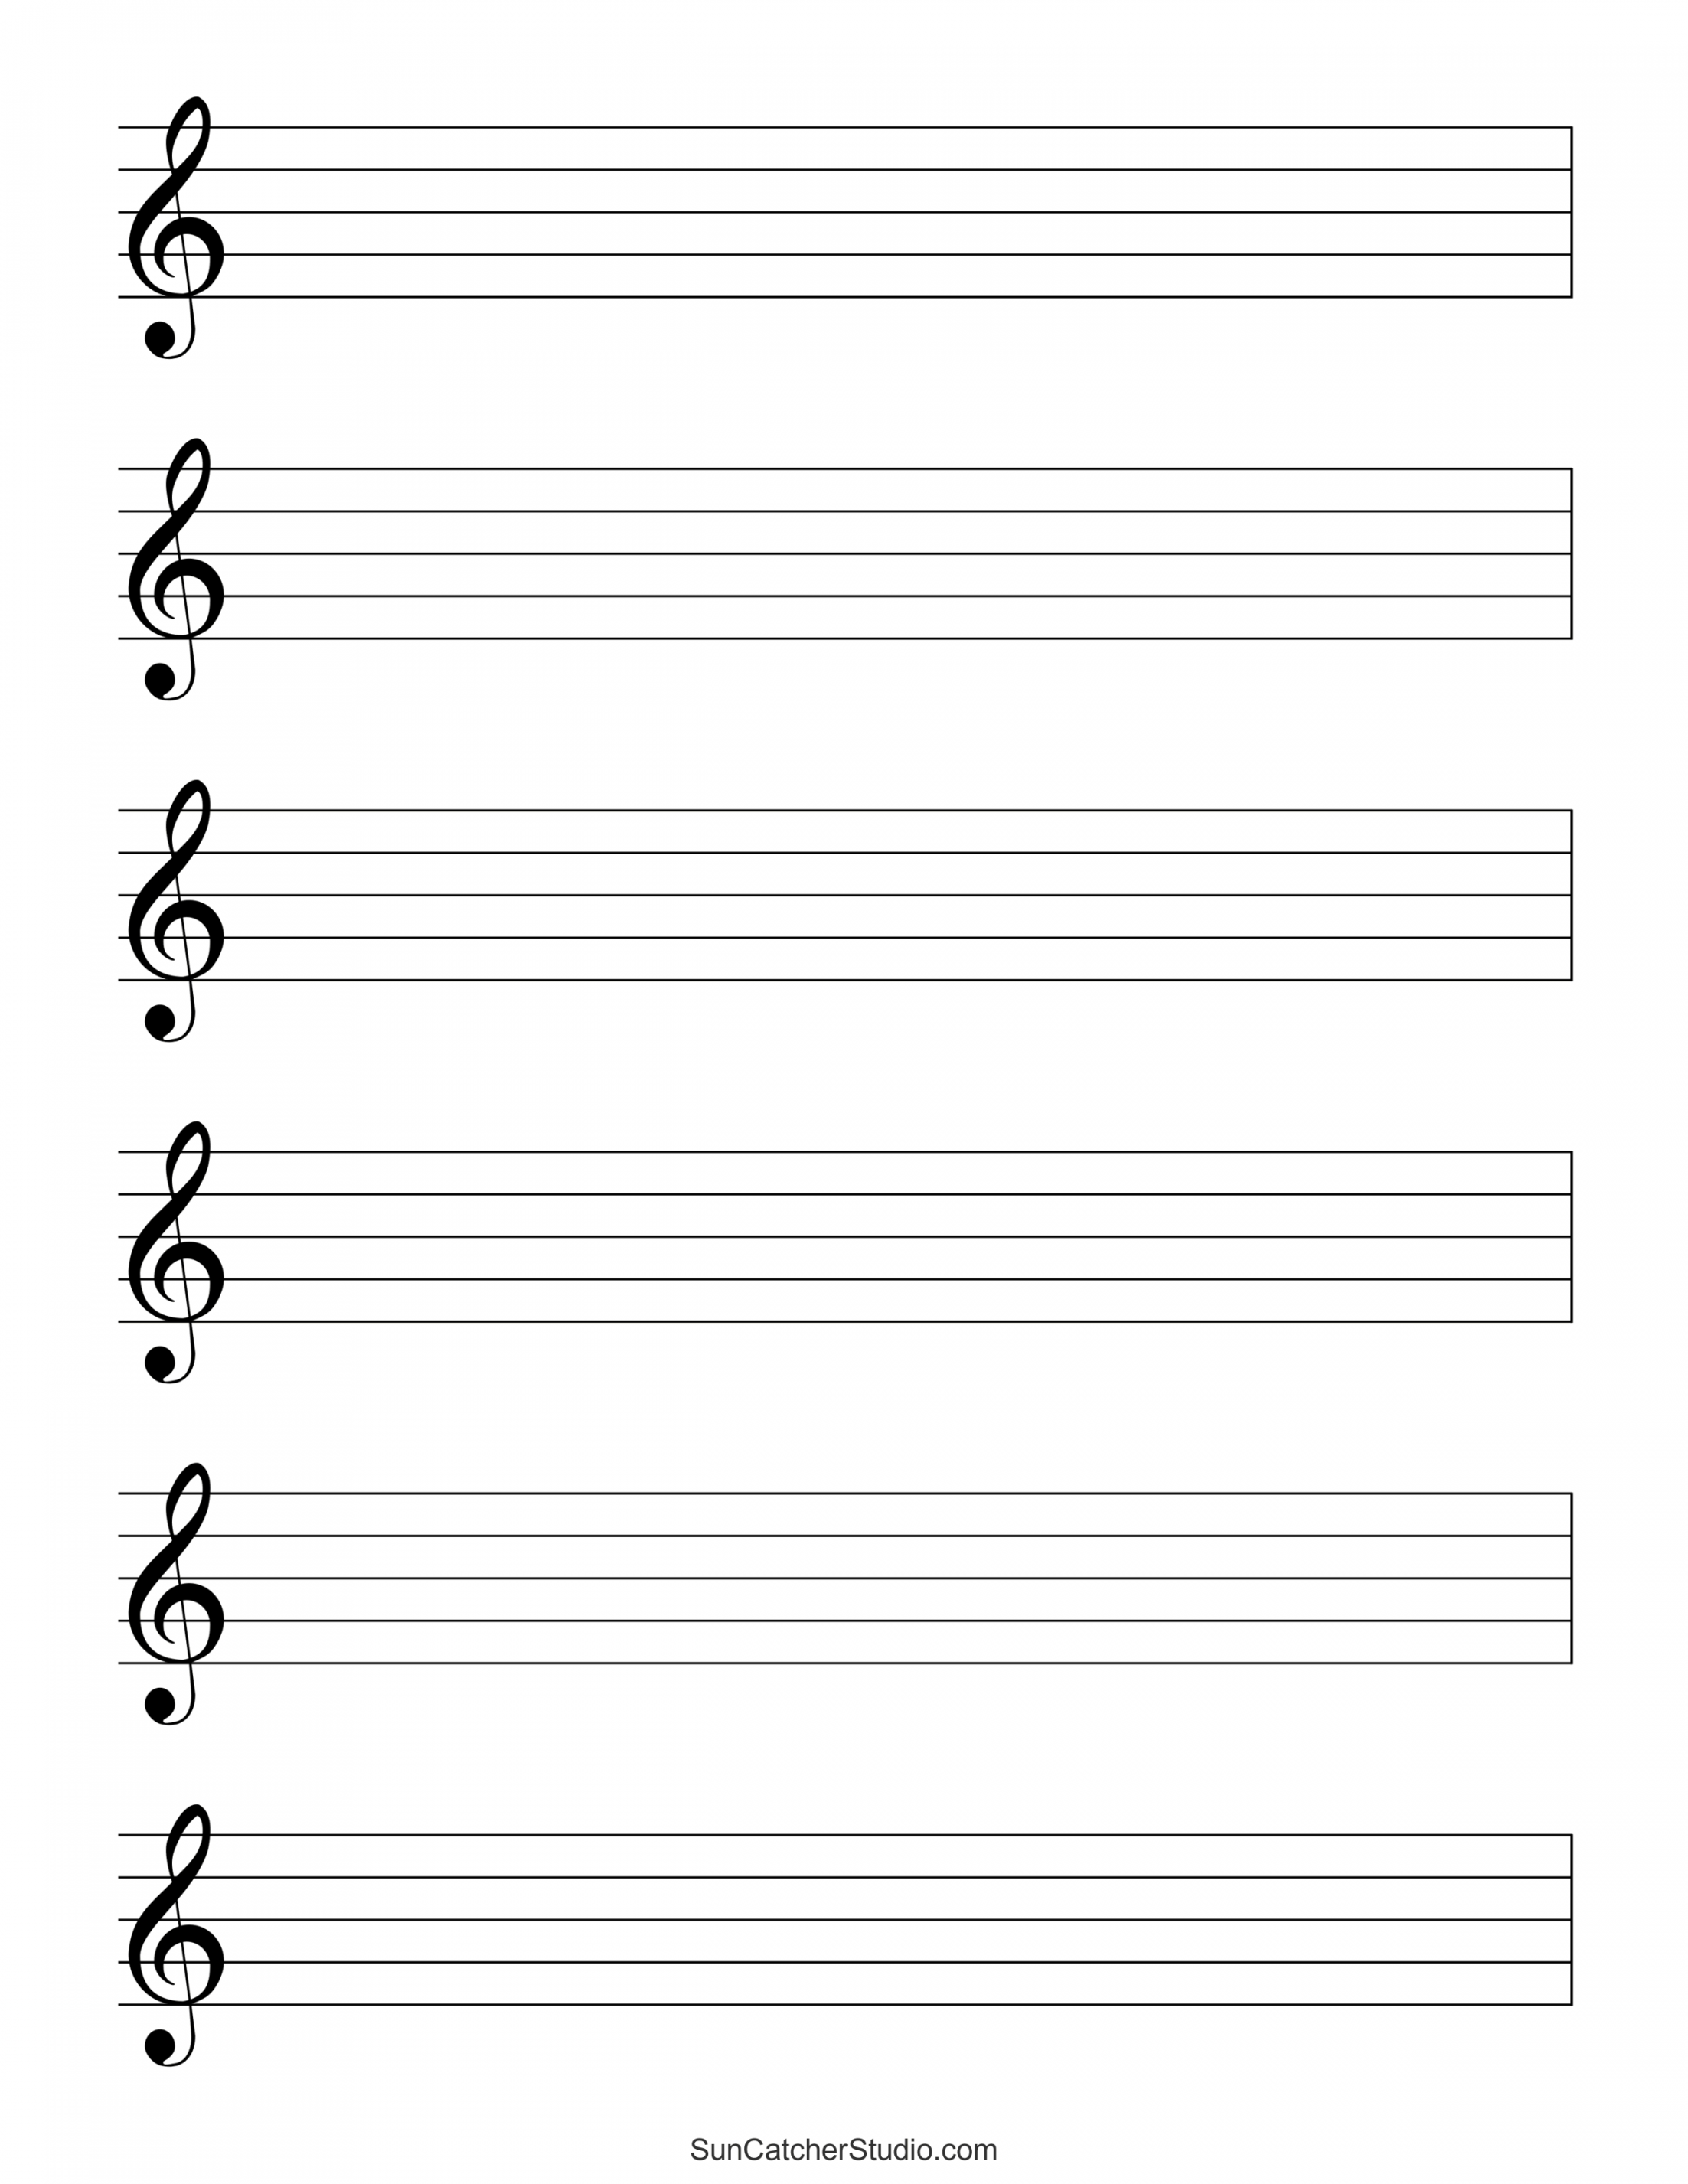 Free Printable Blank Sheet Music - Printable - Blank Sheet Music (Free Printable Staff Paper) – DIY Projects